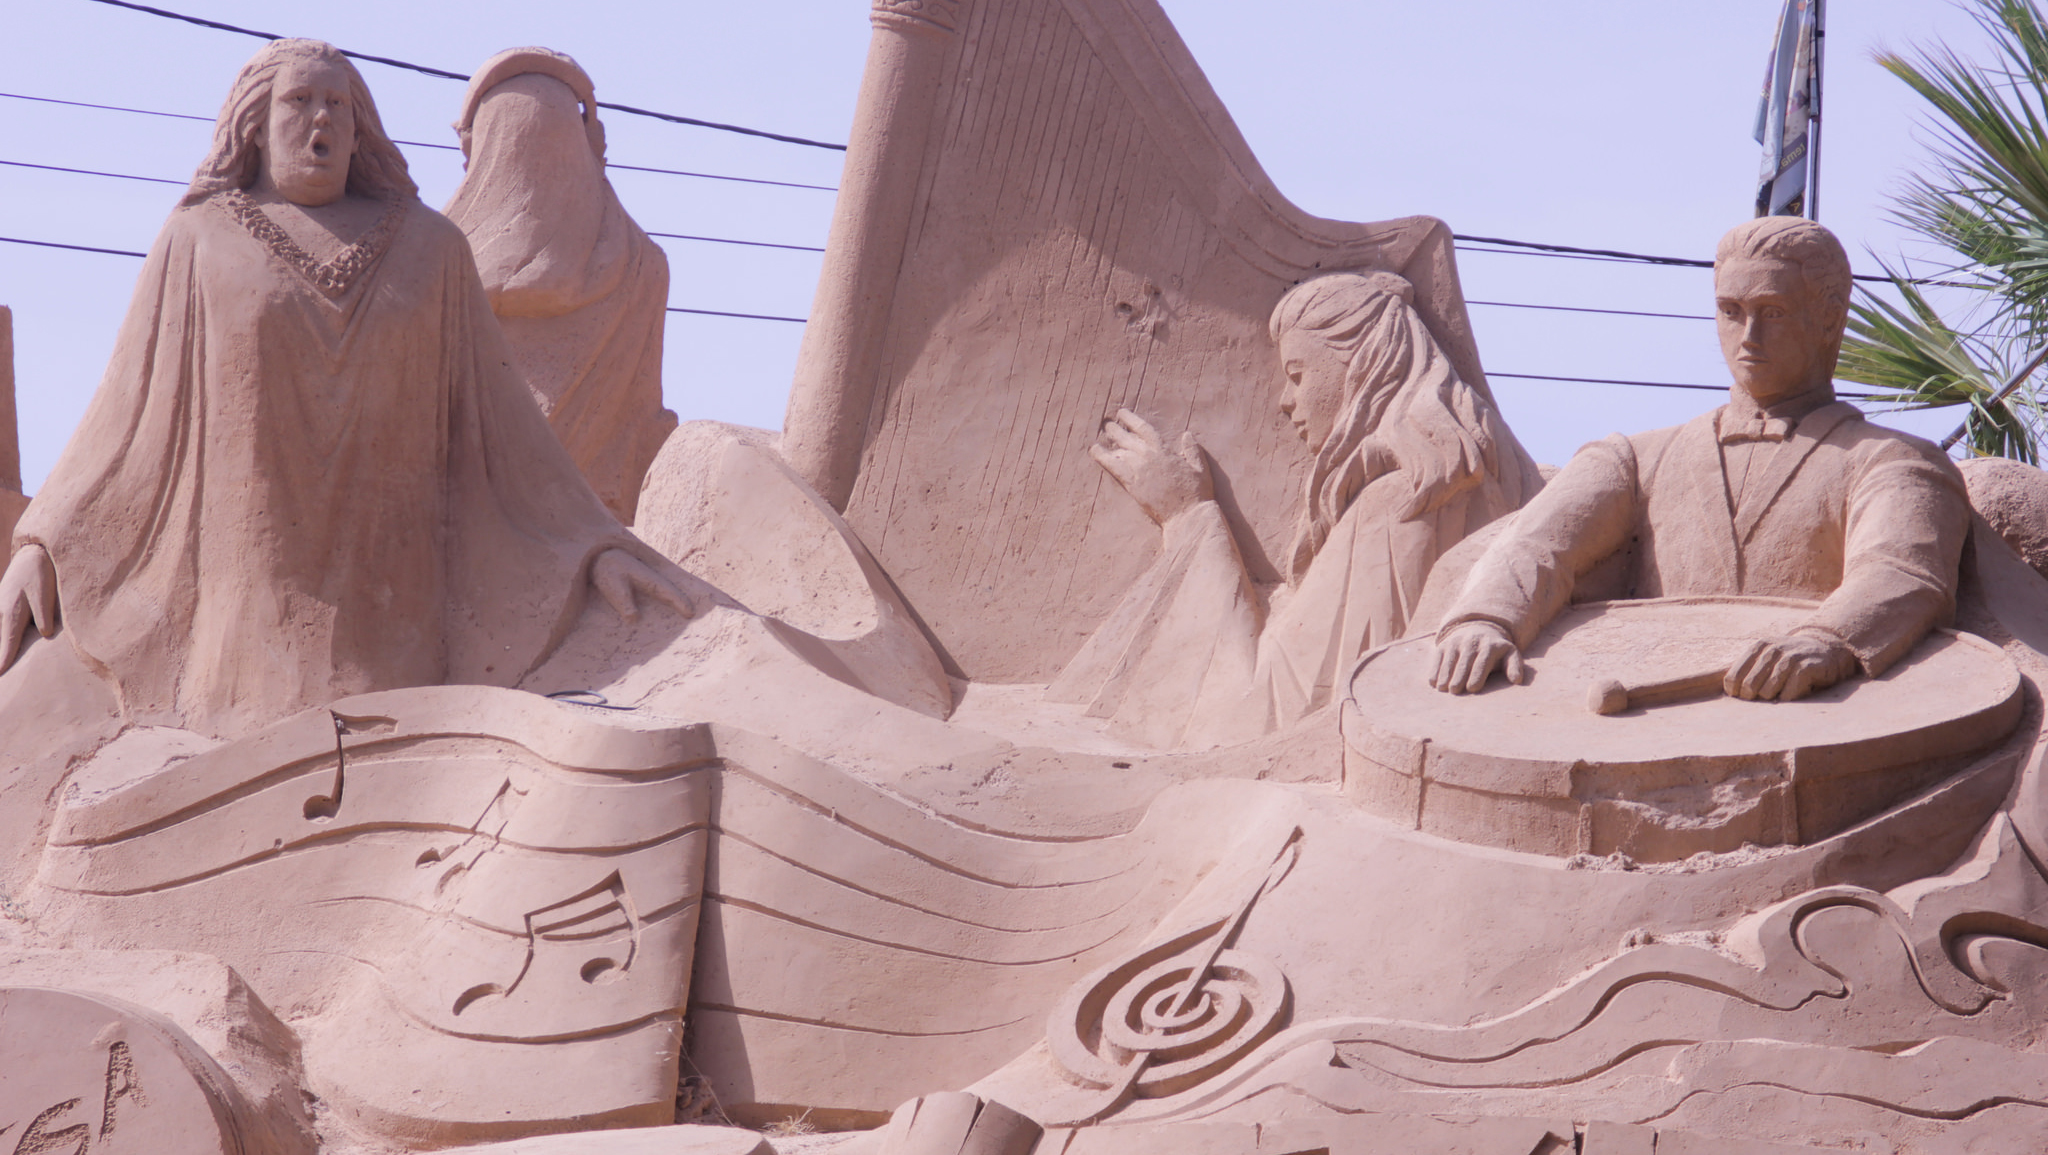 The international sand sculpture festival Inspire